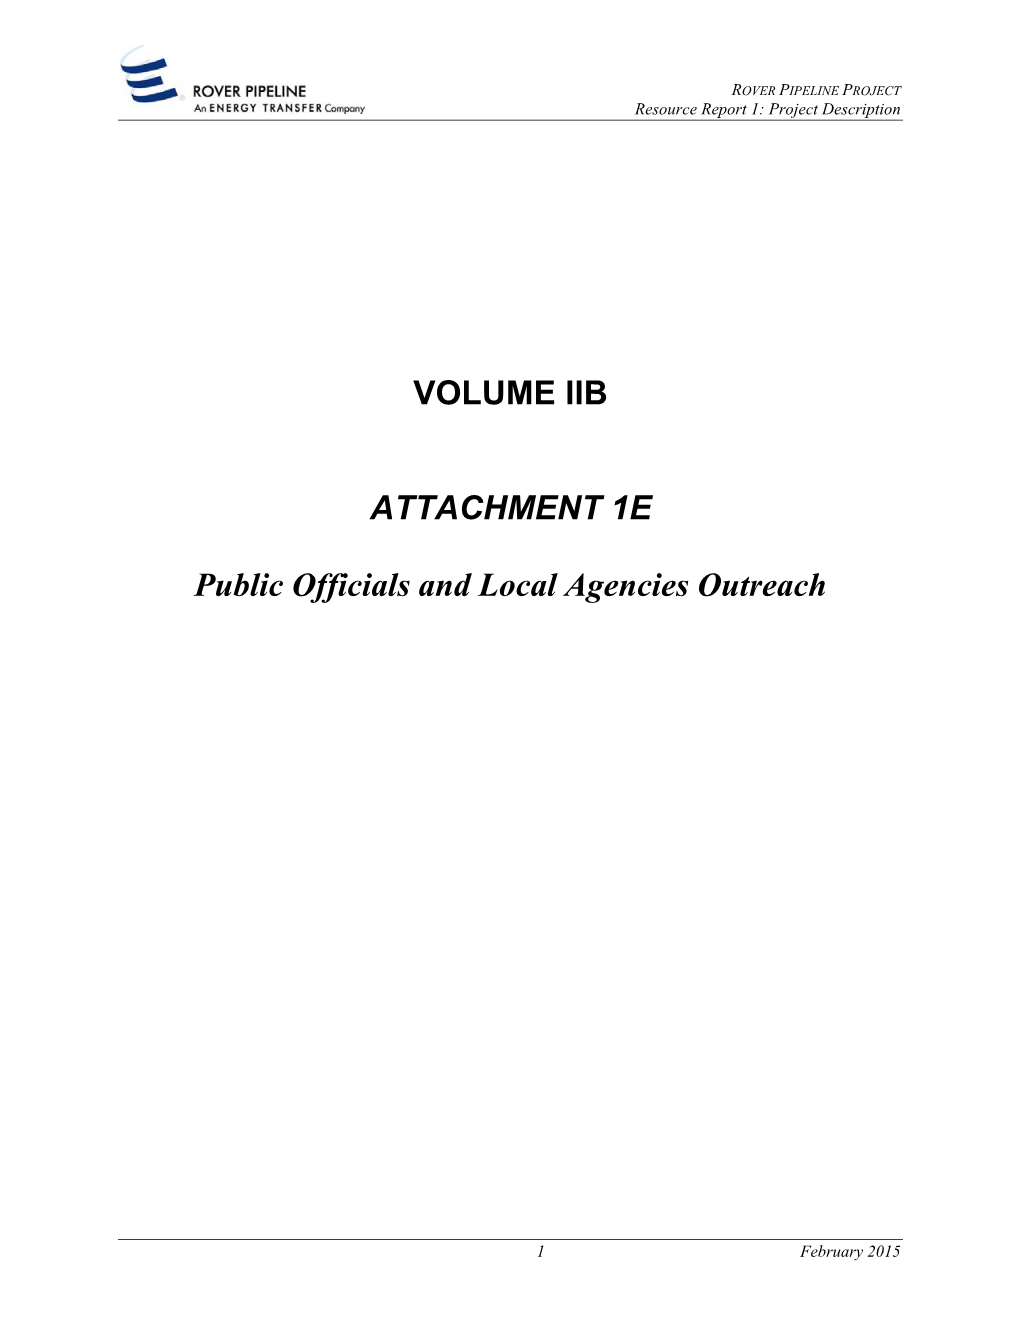 VOLUME IIB ATTACHMENT 1E Public Officials and Local Agencies